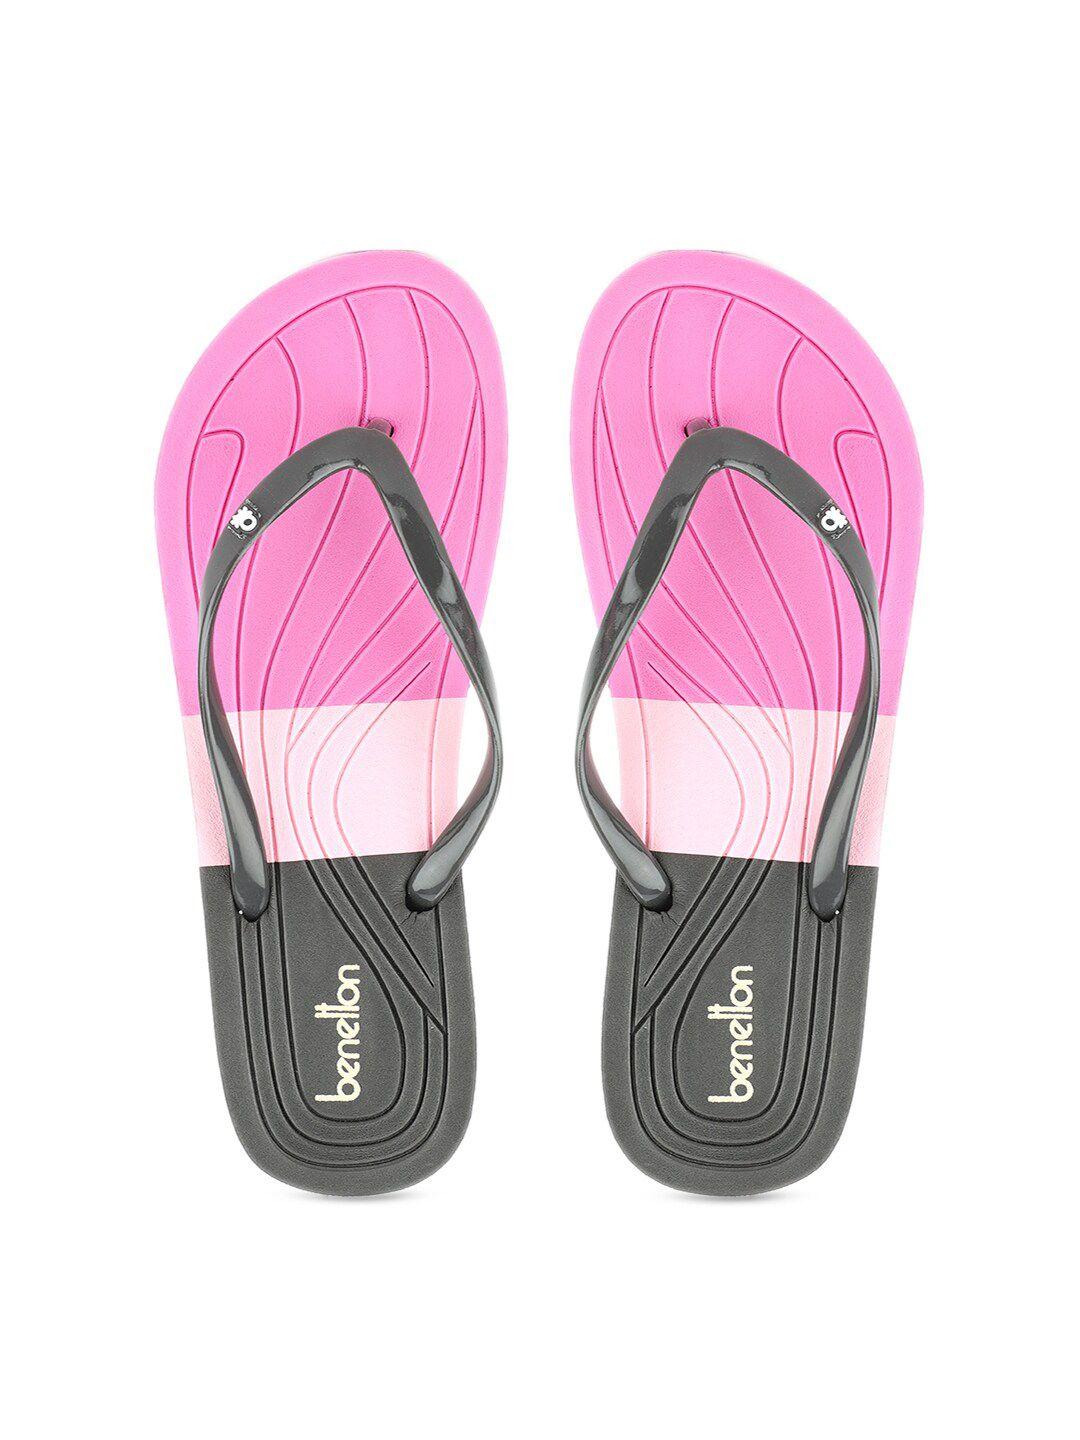 united colors of benetton women grey & pink colourblocked rubber thong flip-flops